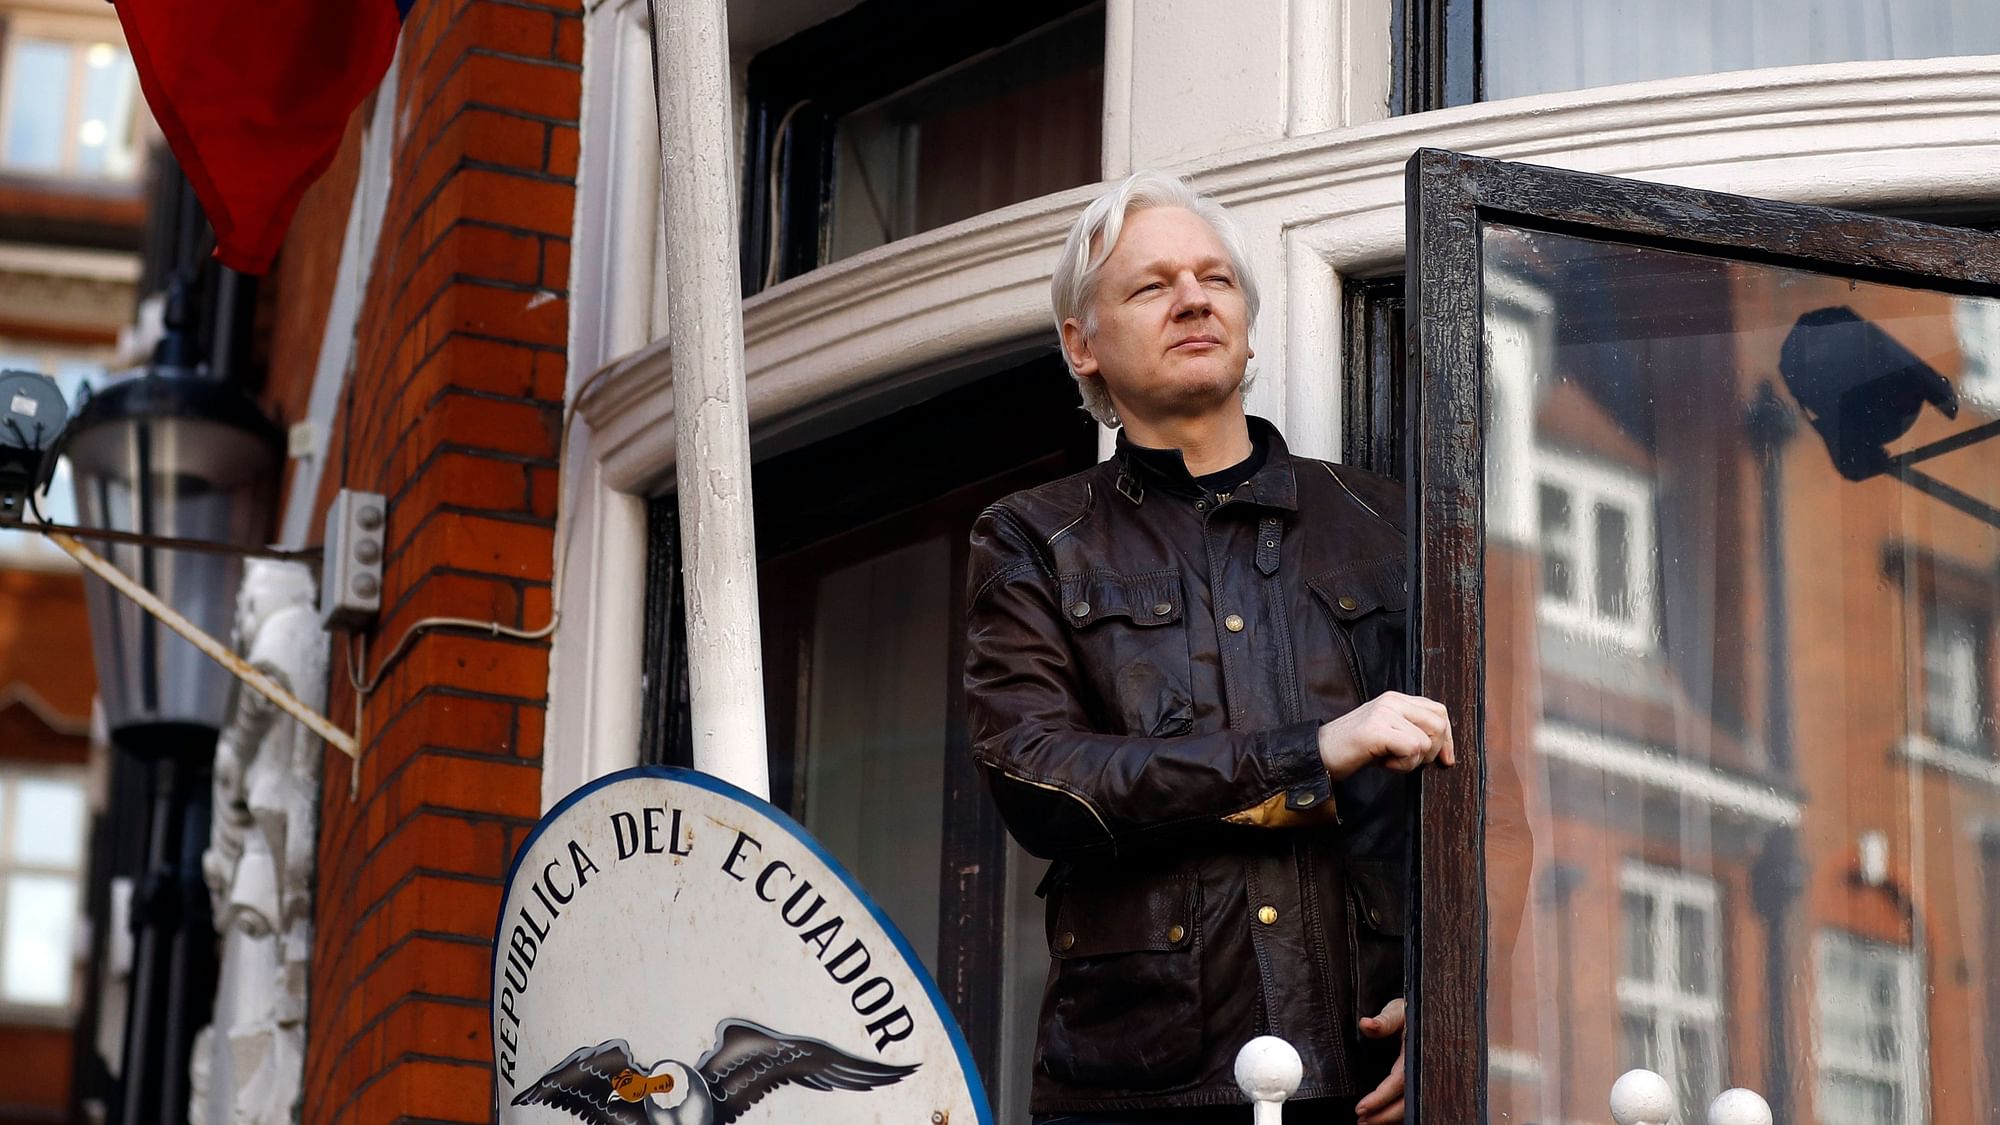  WikiLeaks founder Julian Assange greets supporters outside the Ecuadorian embassy in London.&nbsp;